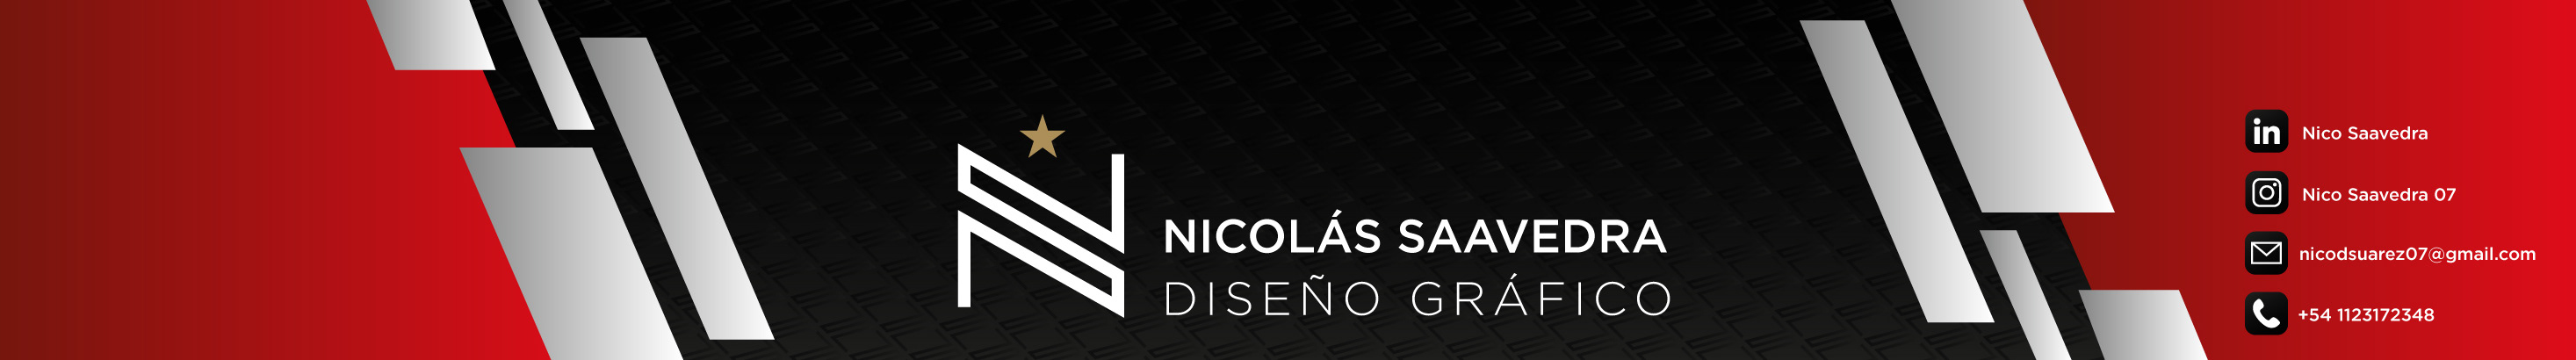 Nico Saavedra 07's profile banner